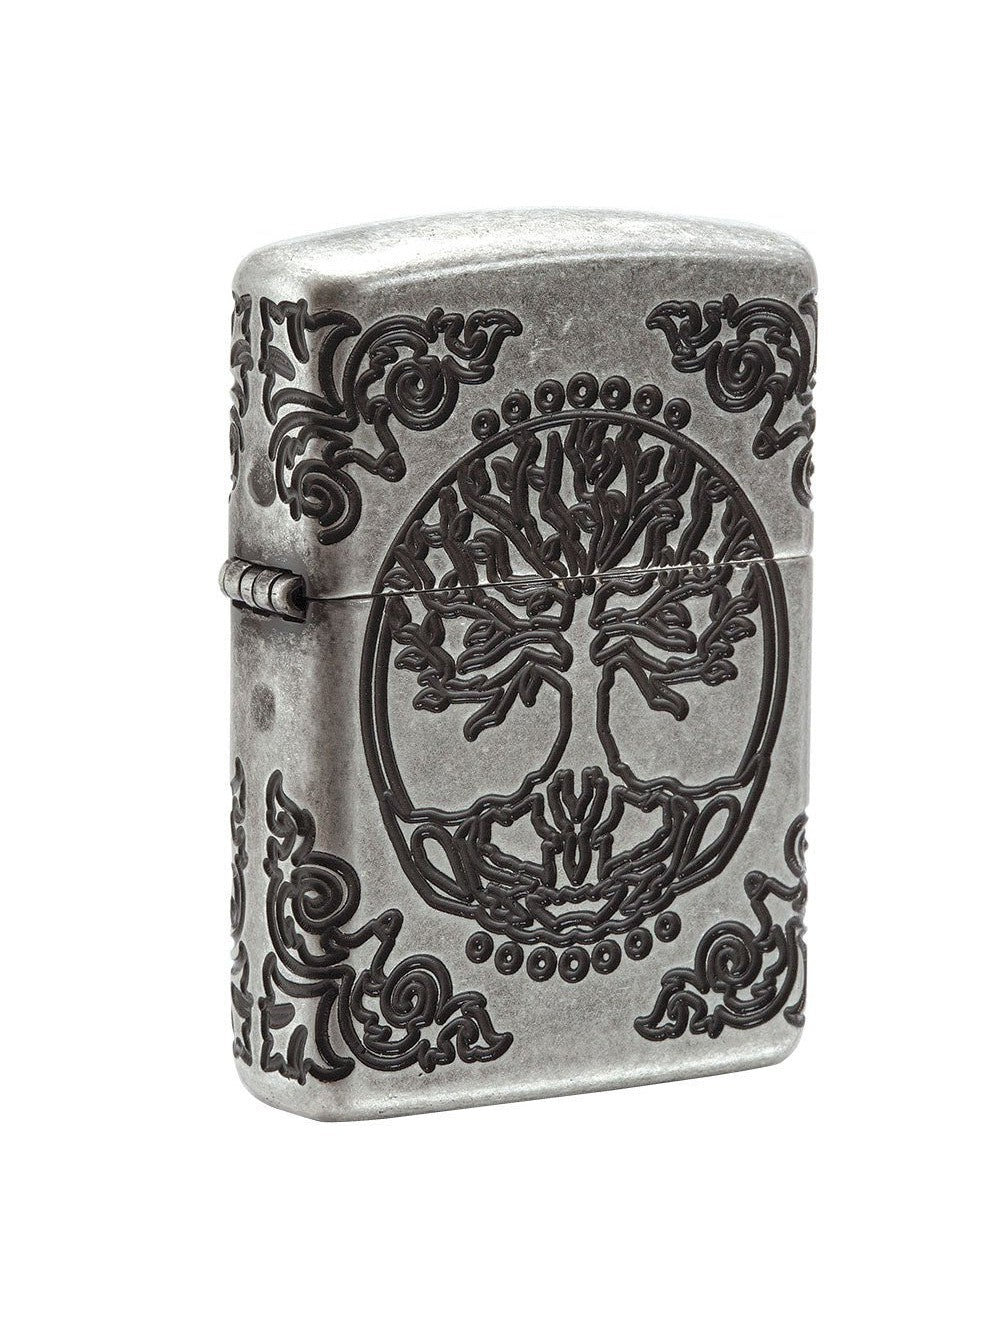 Zippo Lighter: Armor Multicut Tree of Life - Antique Silver 29670